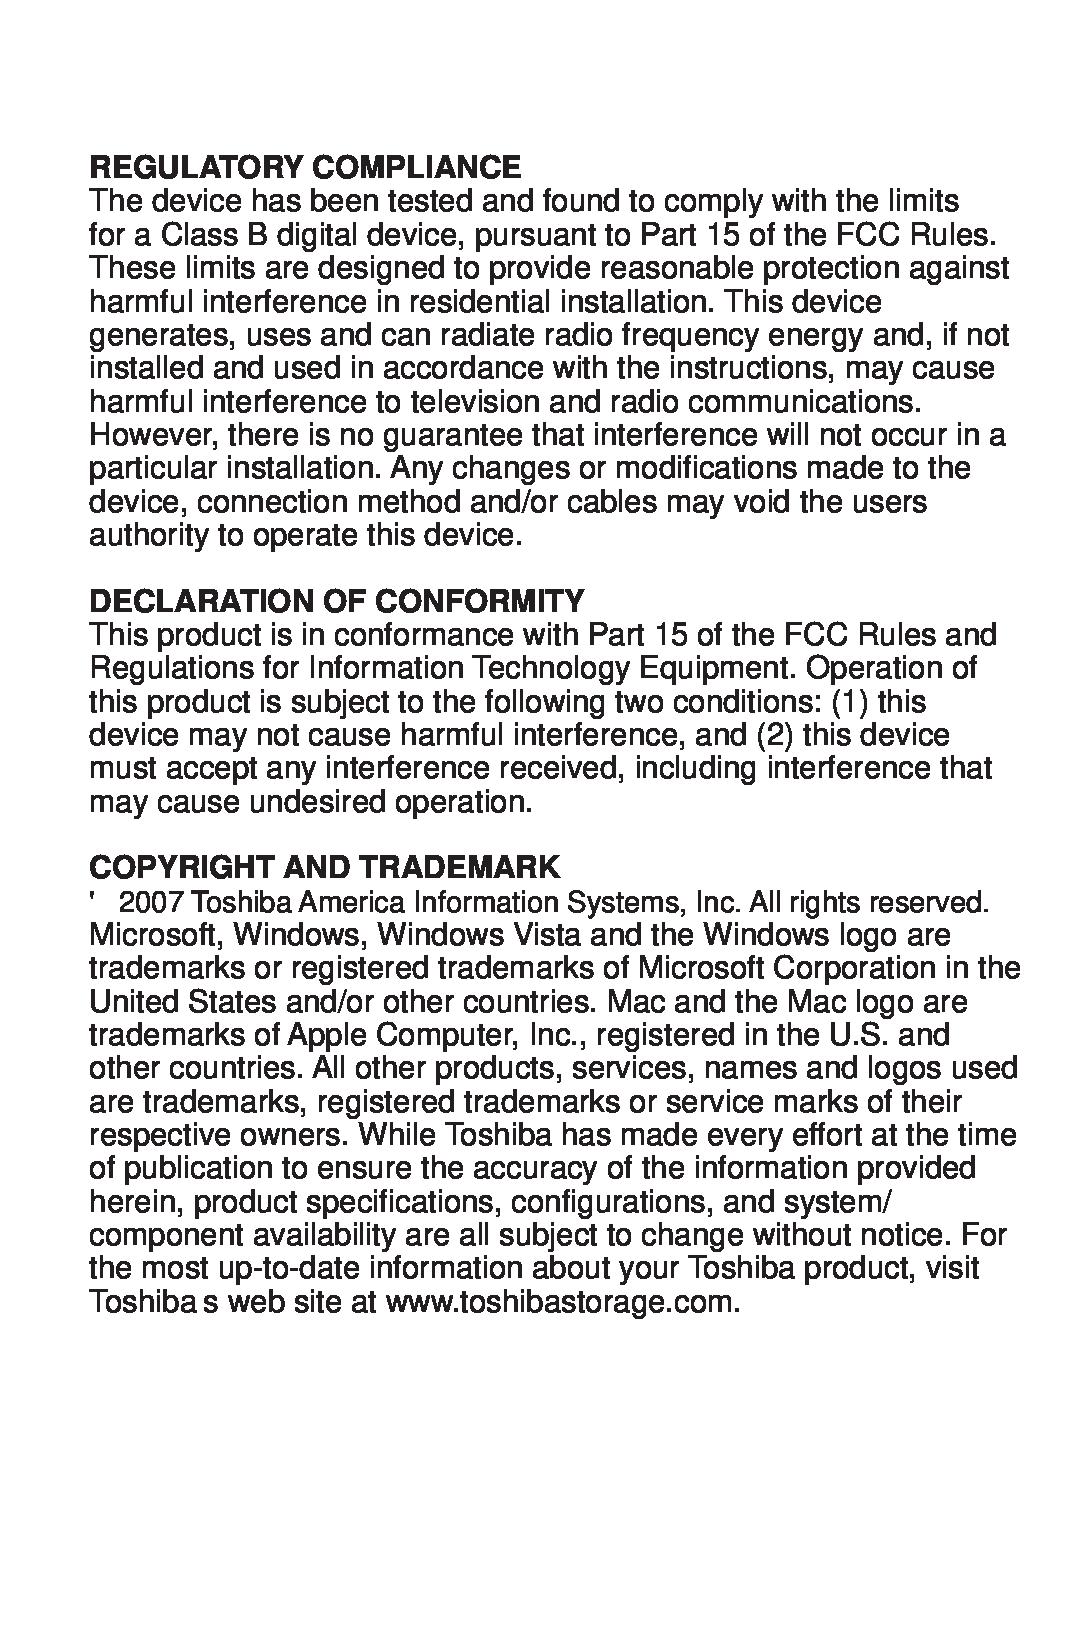 Toshiba 480082-D0 warranty Regulatory Compliance, Declaration Of Conformity, Copyright And Trademark 